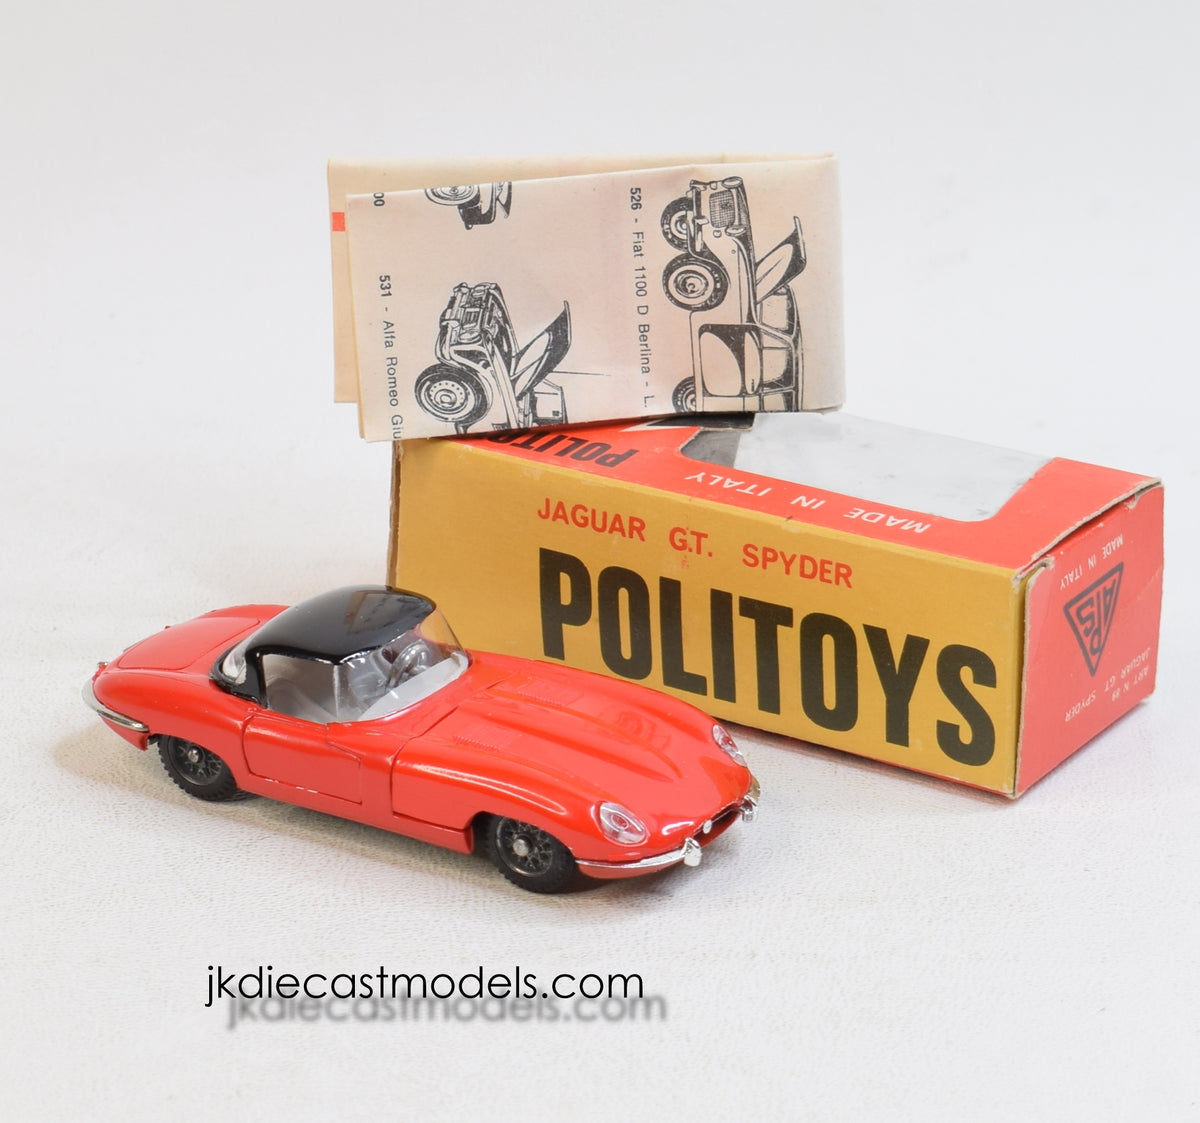 Politoys Art. 89 Jaguar GT. Spyder Virtually Mint/Boxed 'Perth' Collection